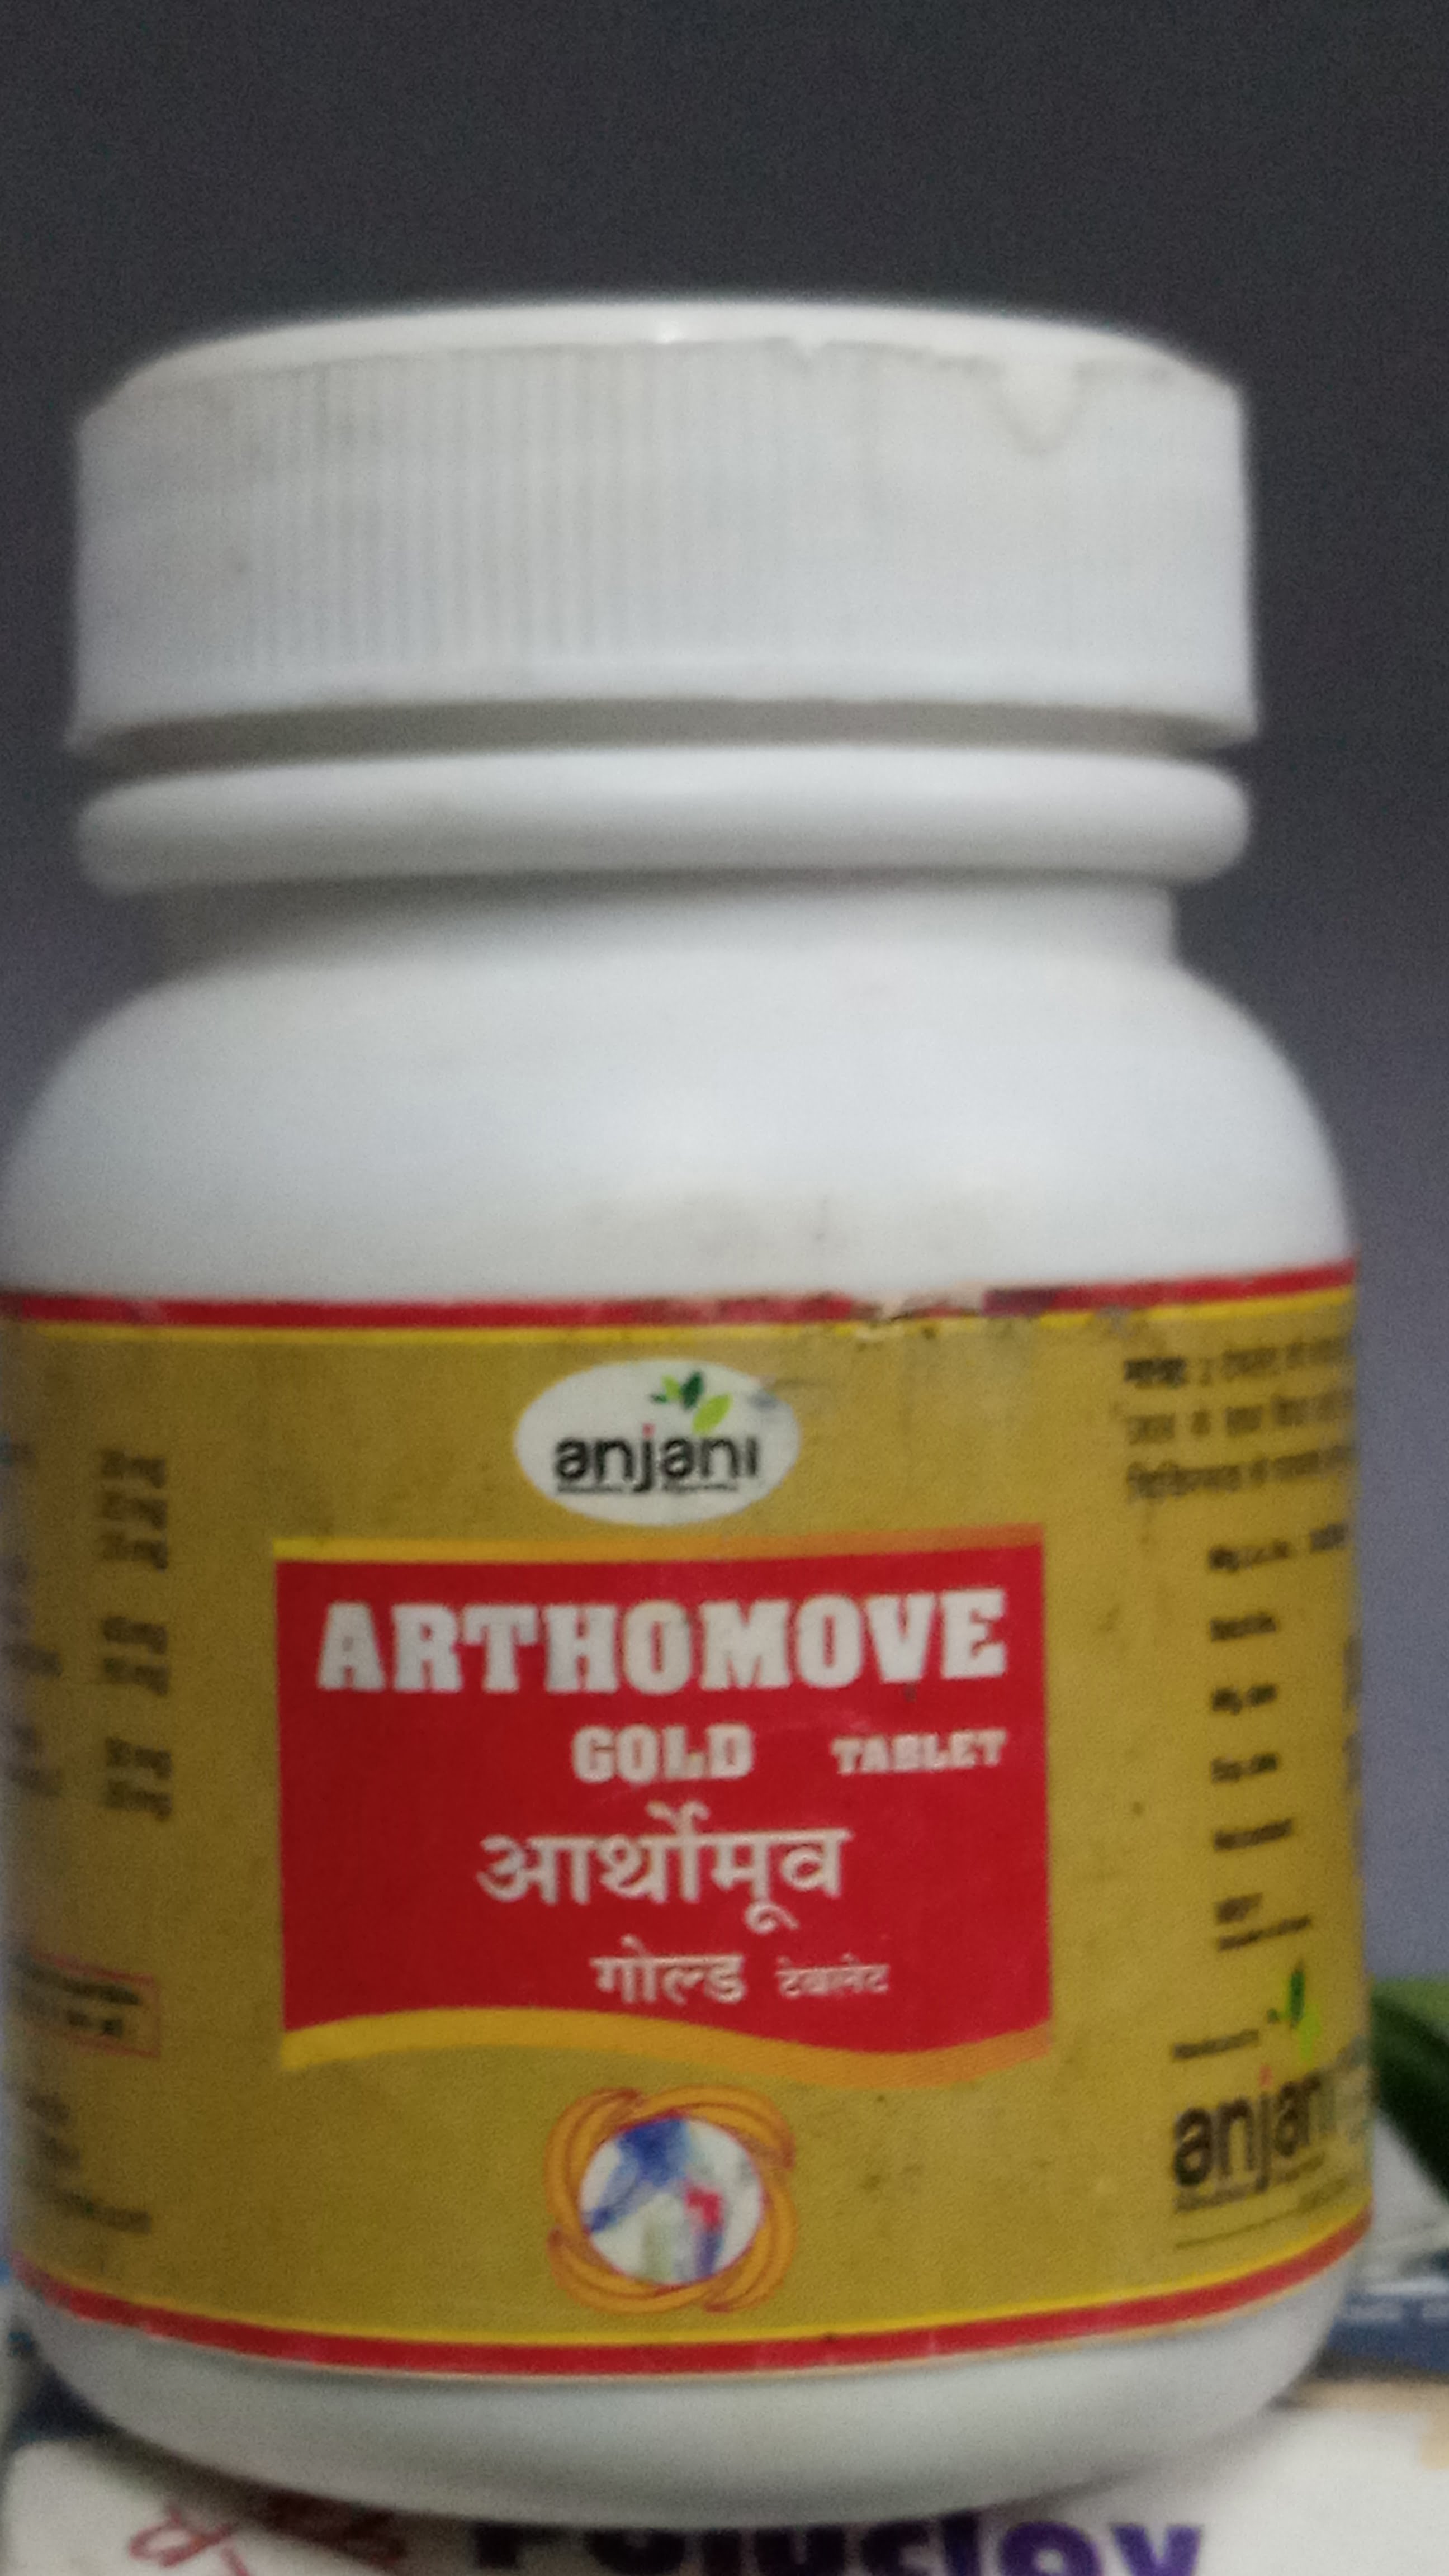 arthomove gold tablet 50 tab upto 20% off anjani pharmaceuticals